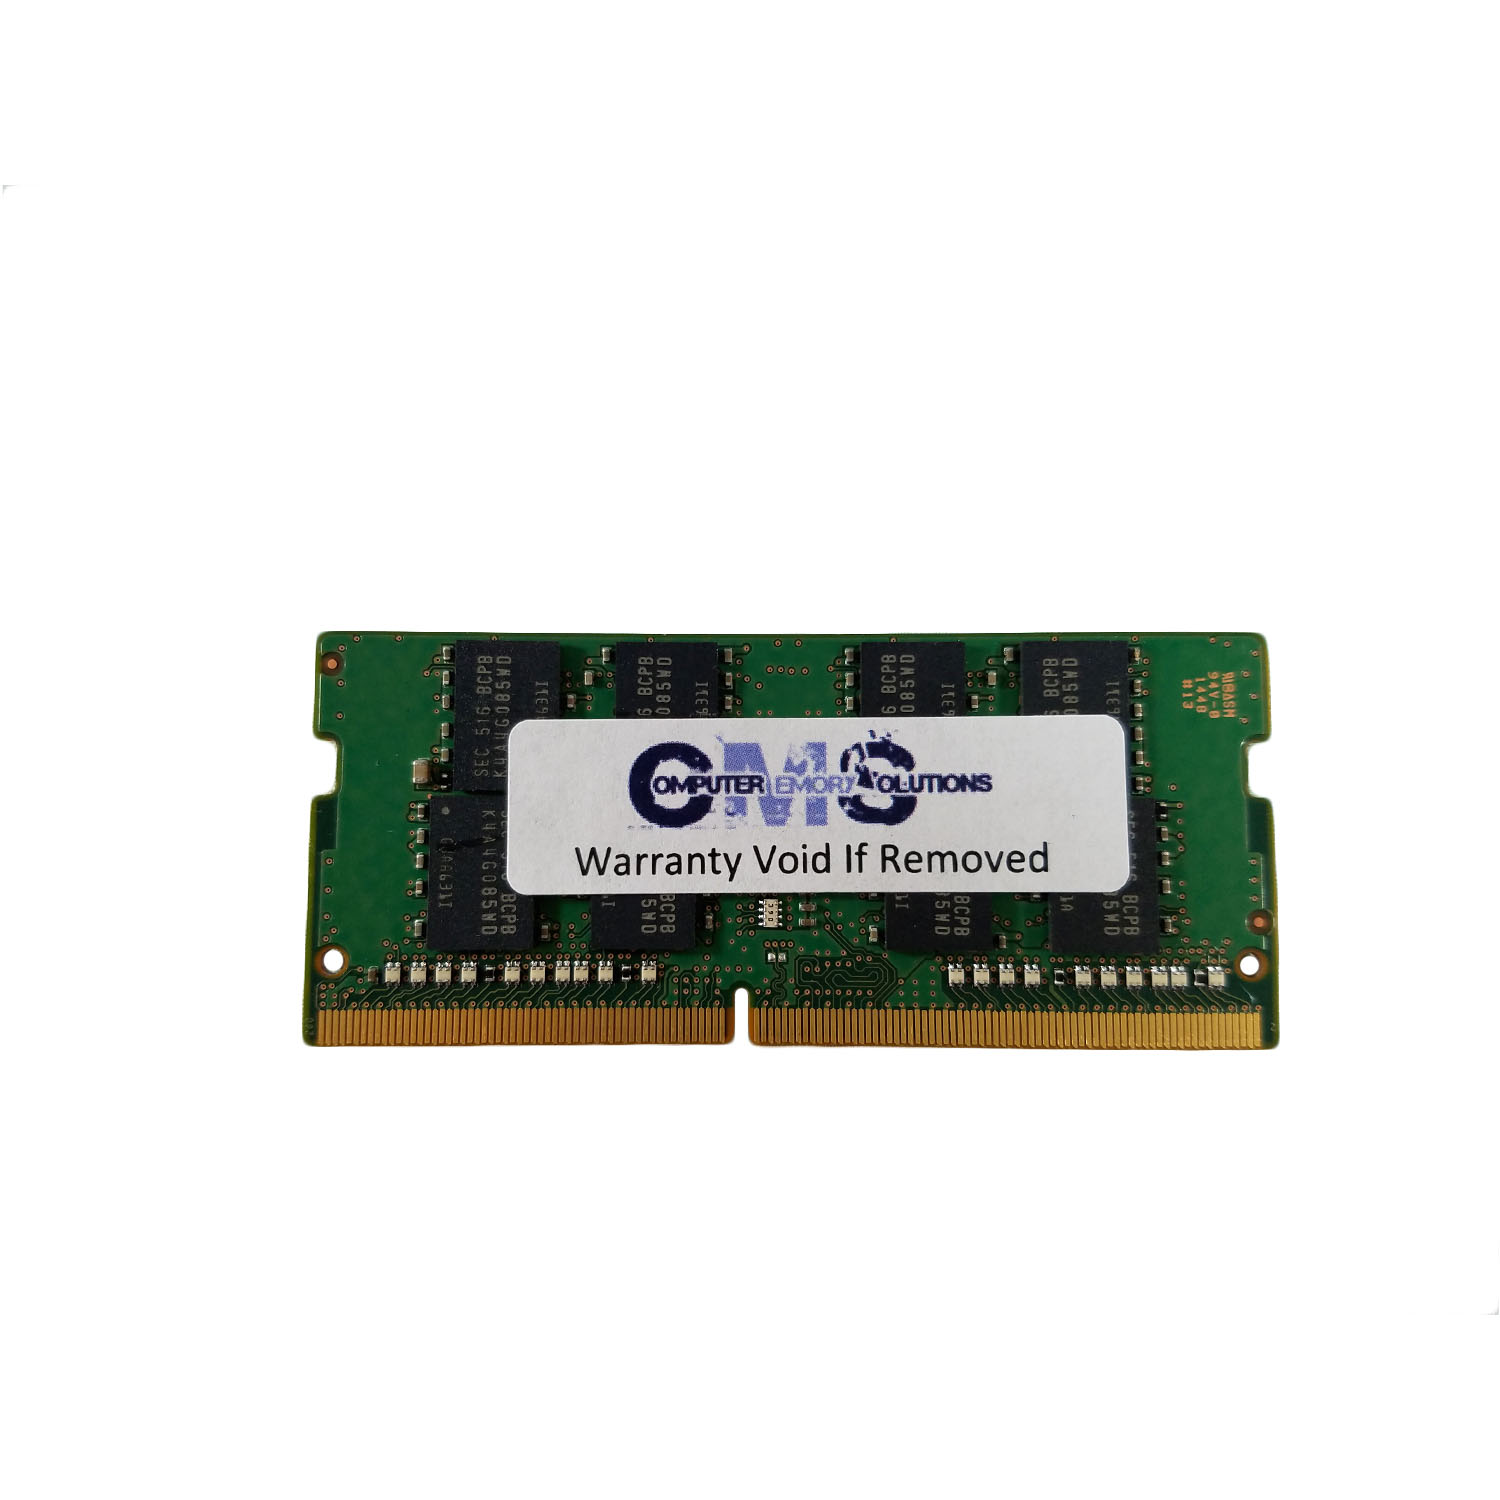 CMS 16GB (1X16GB) DDR4 19200 2400MHZ NON ECC SODIMM Memory Ram Upgrade Compatible with Gigabyte® Mini STX System BRIX GB-BSi3HAL-6100, GB-BSi5A-6200, GB-BSi5HA-6200, GB-BSi5HA-6300 - C107 - image 1 of 3